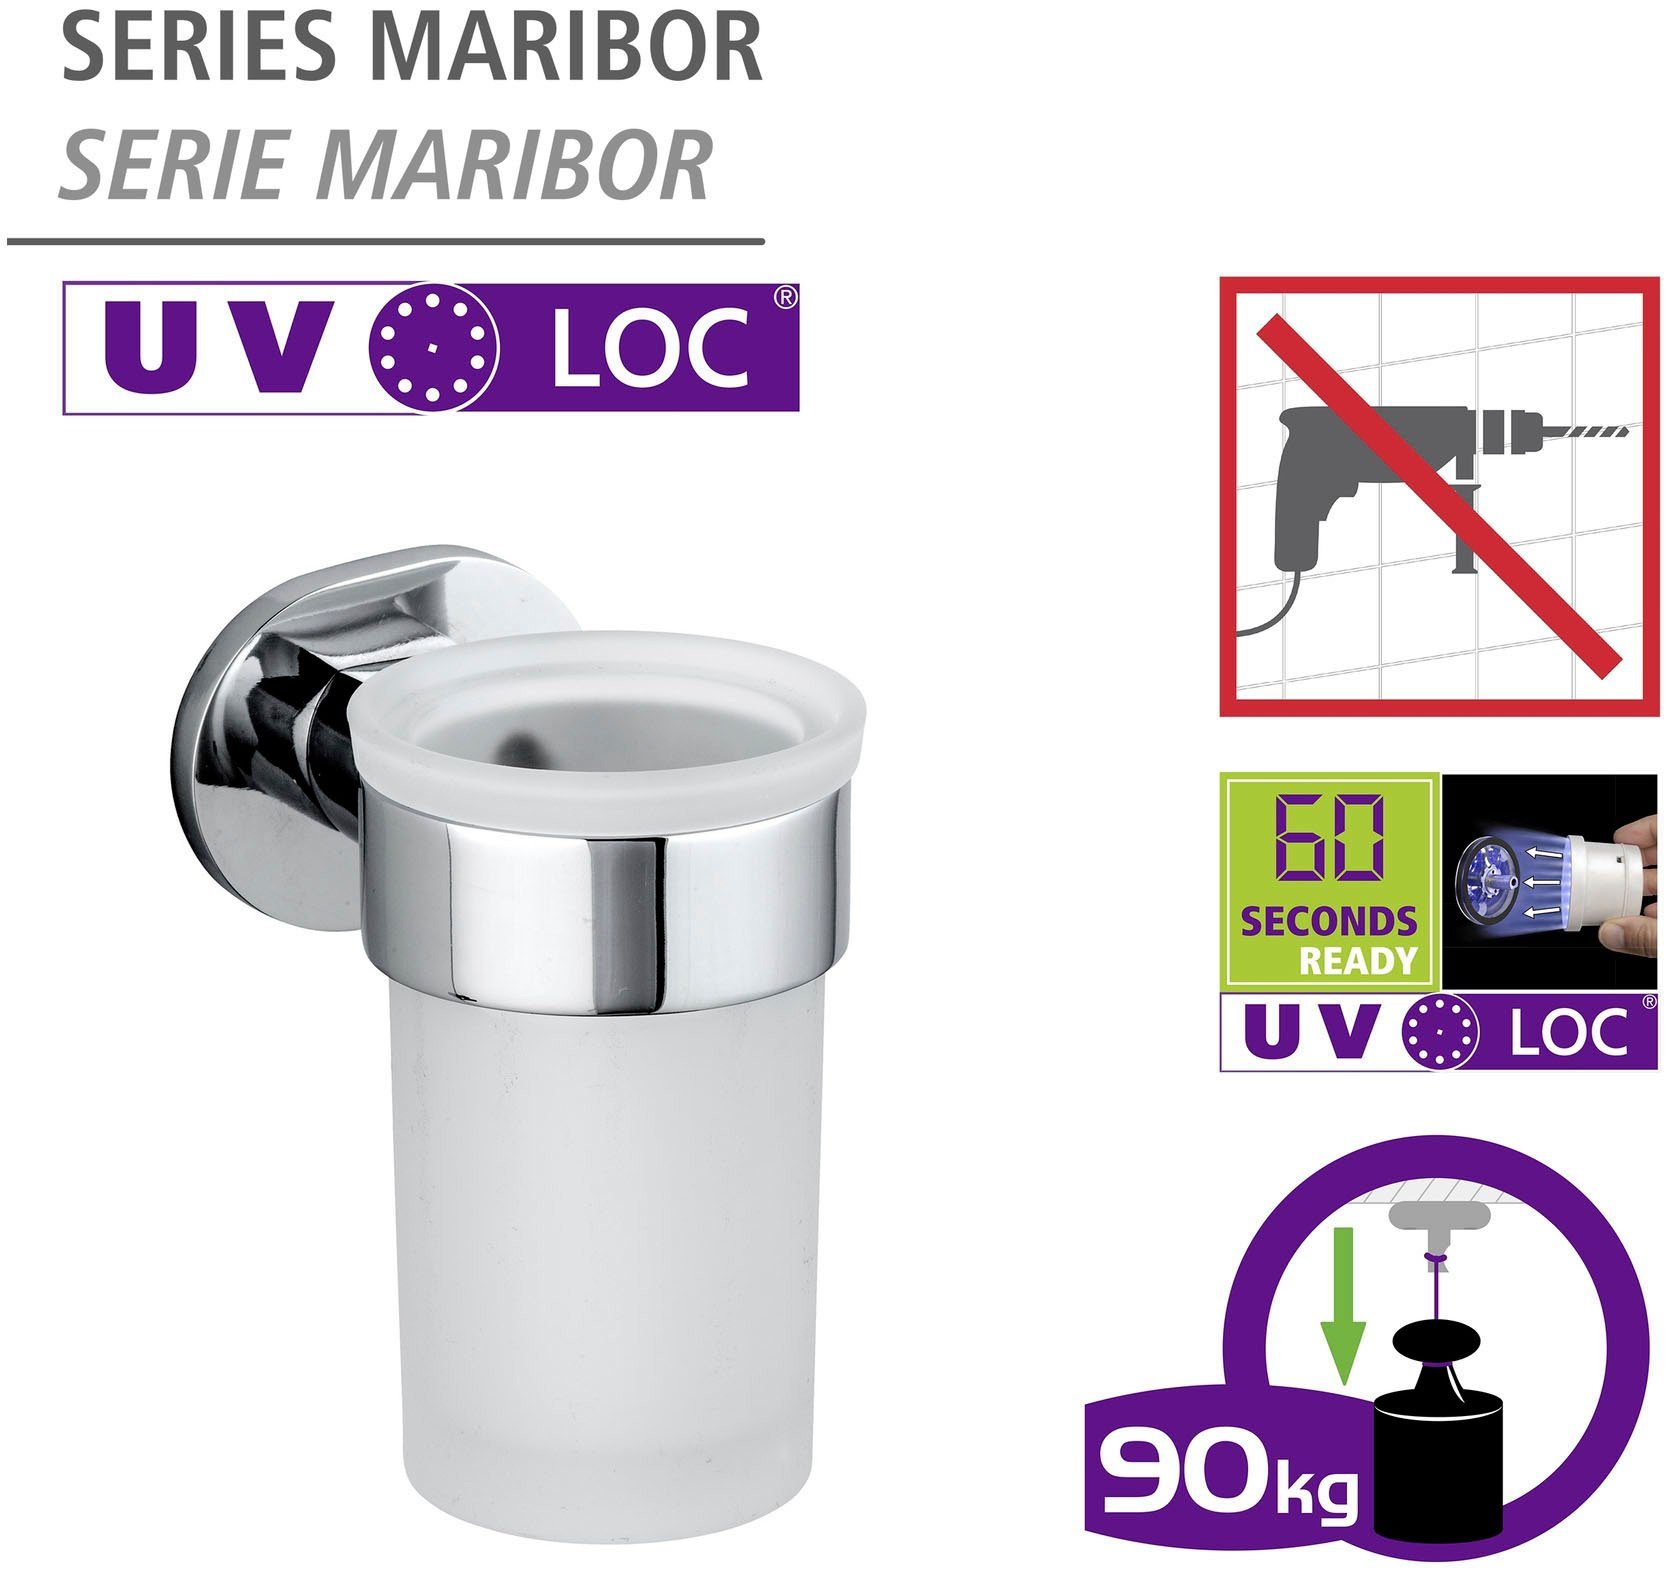 WENKO Zahnputzbecher Klebesystem UV-Loc® Maribor, mit befestigen Bohren innovativem ohne